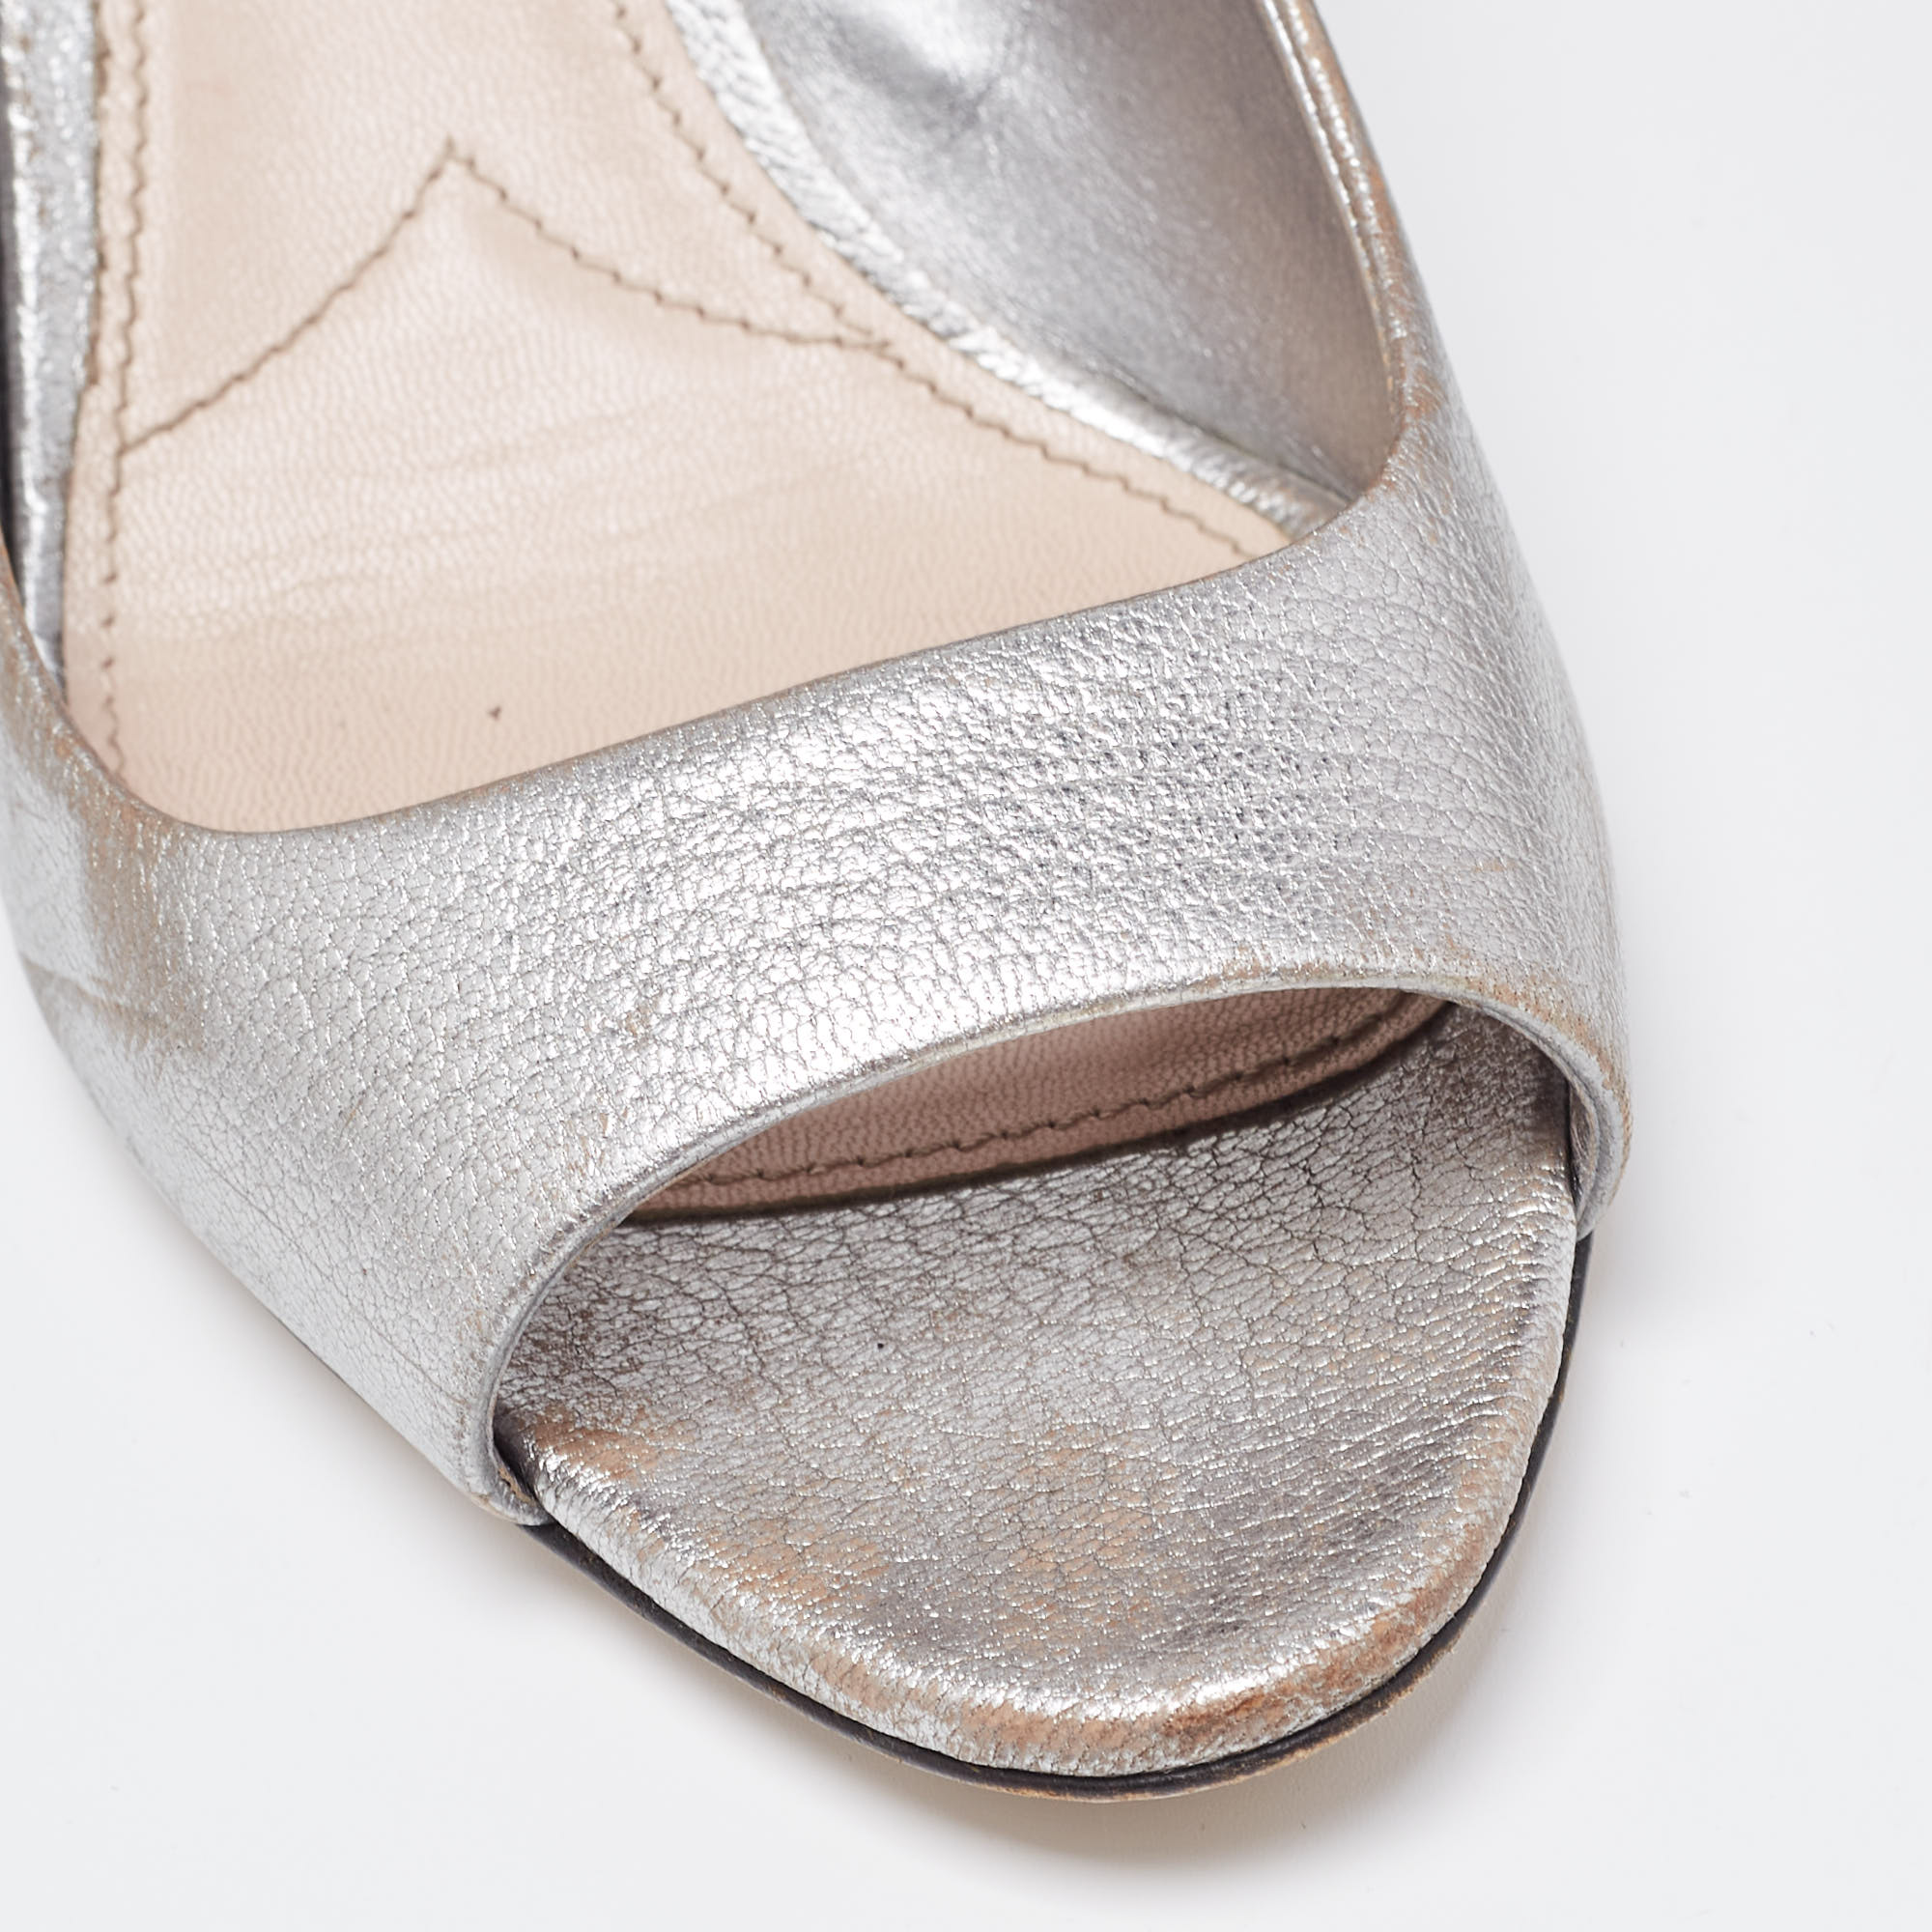 Miu Miu Silver Leather Crystal Block Heel Open Toe Pumps Size 38